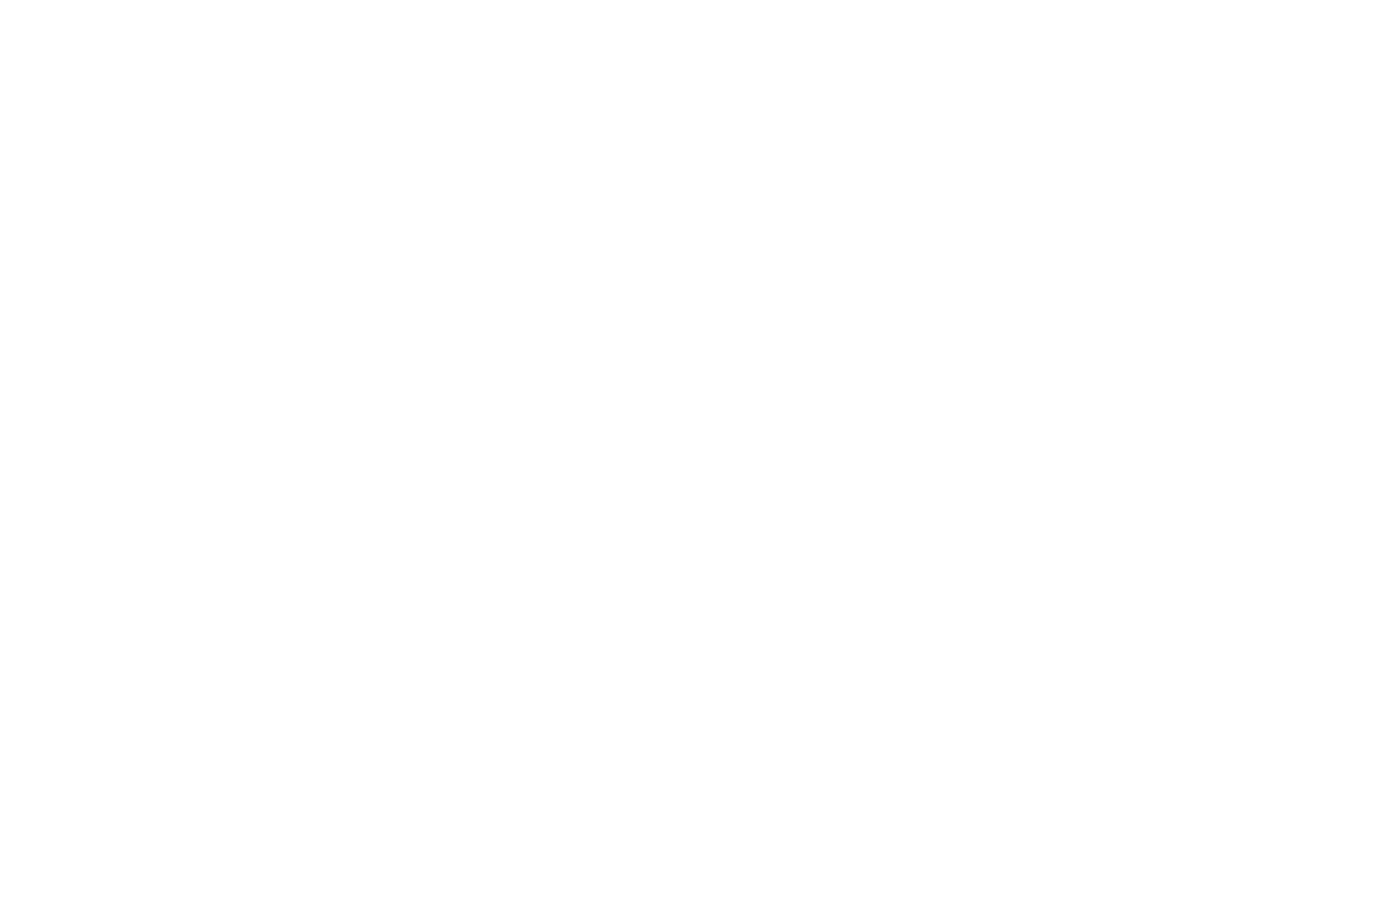 Amber Church